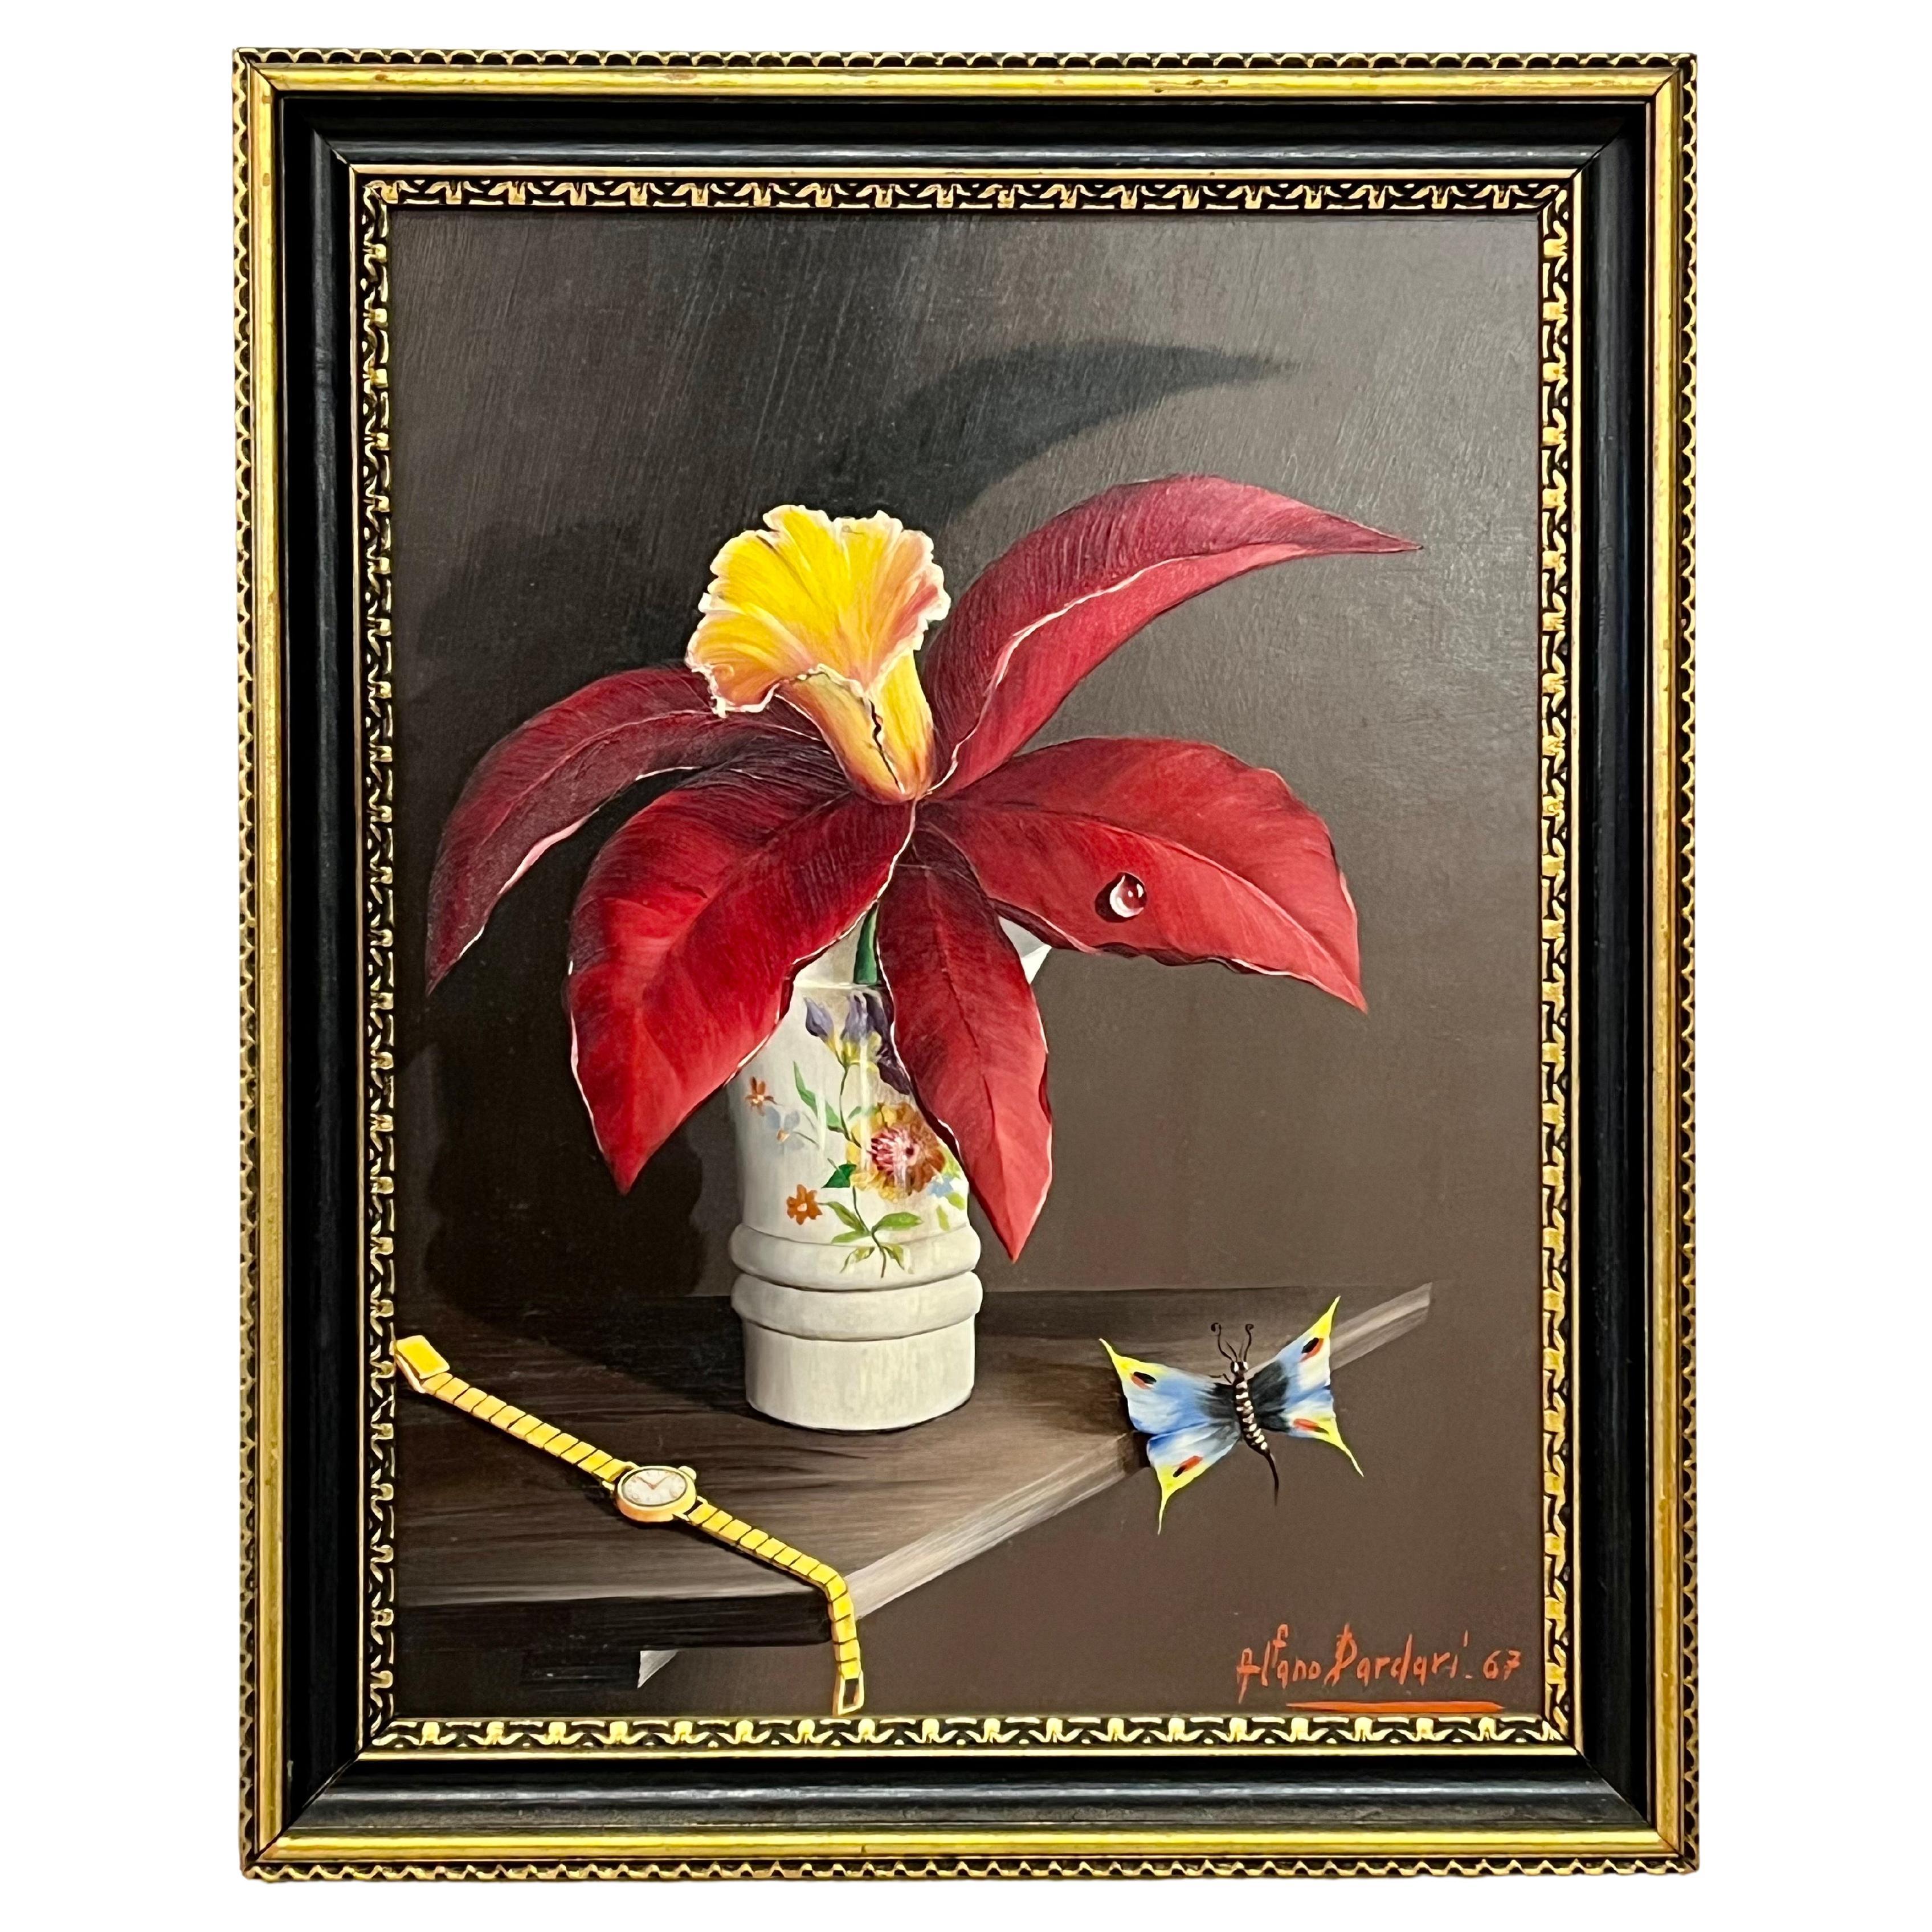 Alfano Dardari Midcentury Trompe L’oeil Still Life Oil Painting Framed For Sale